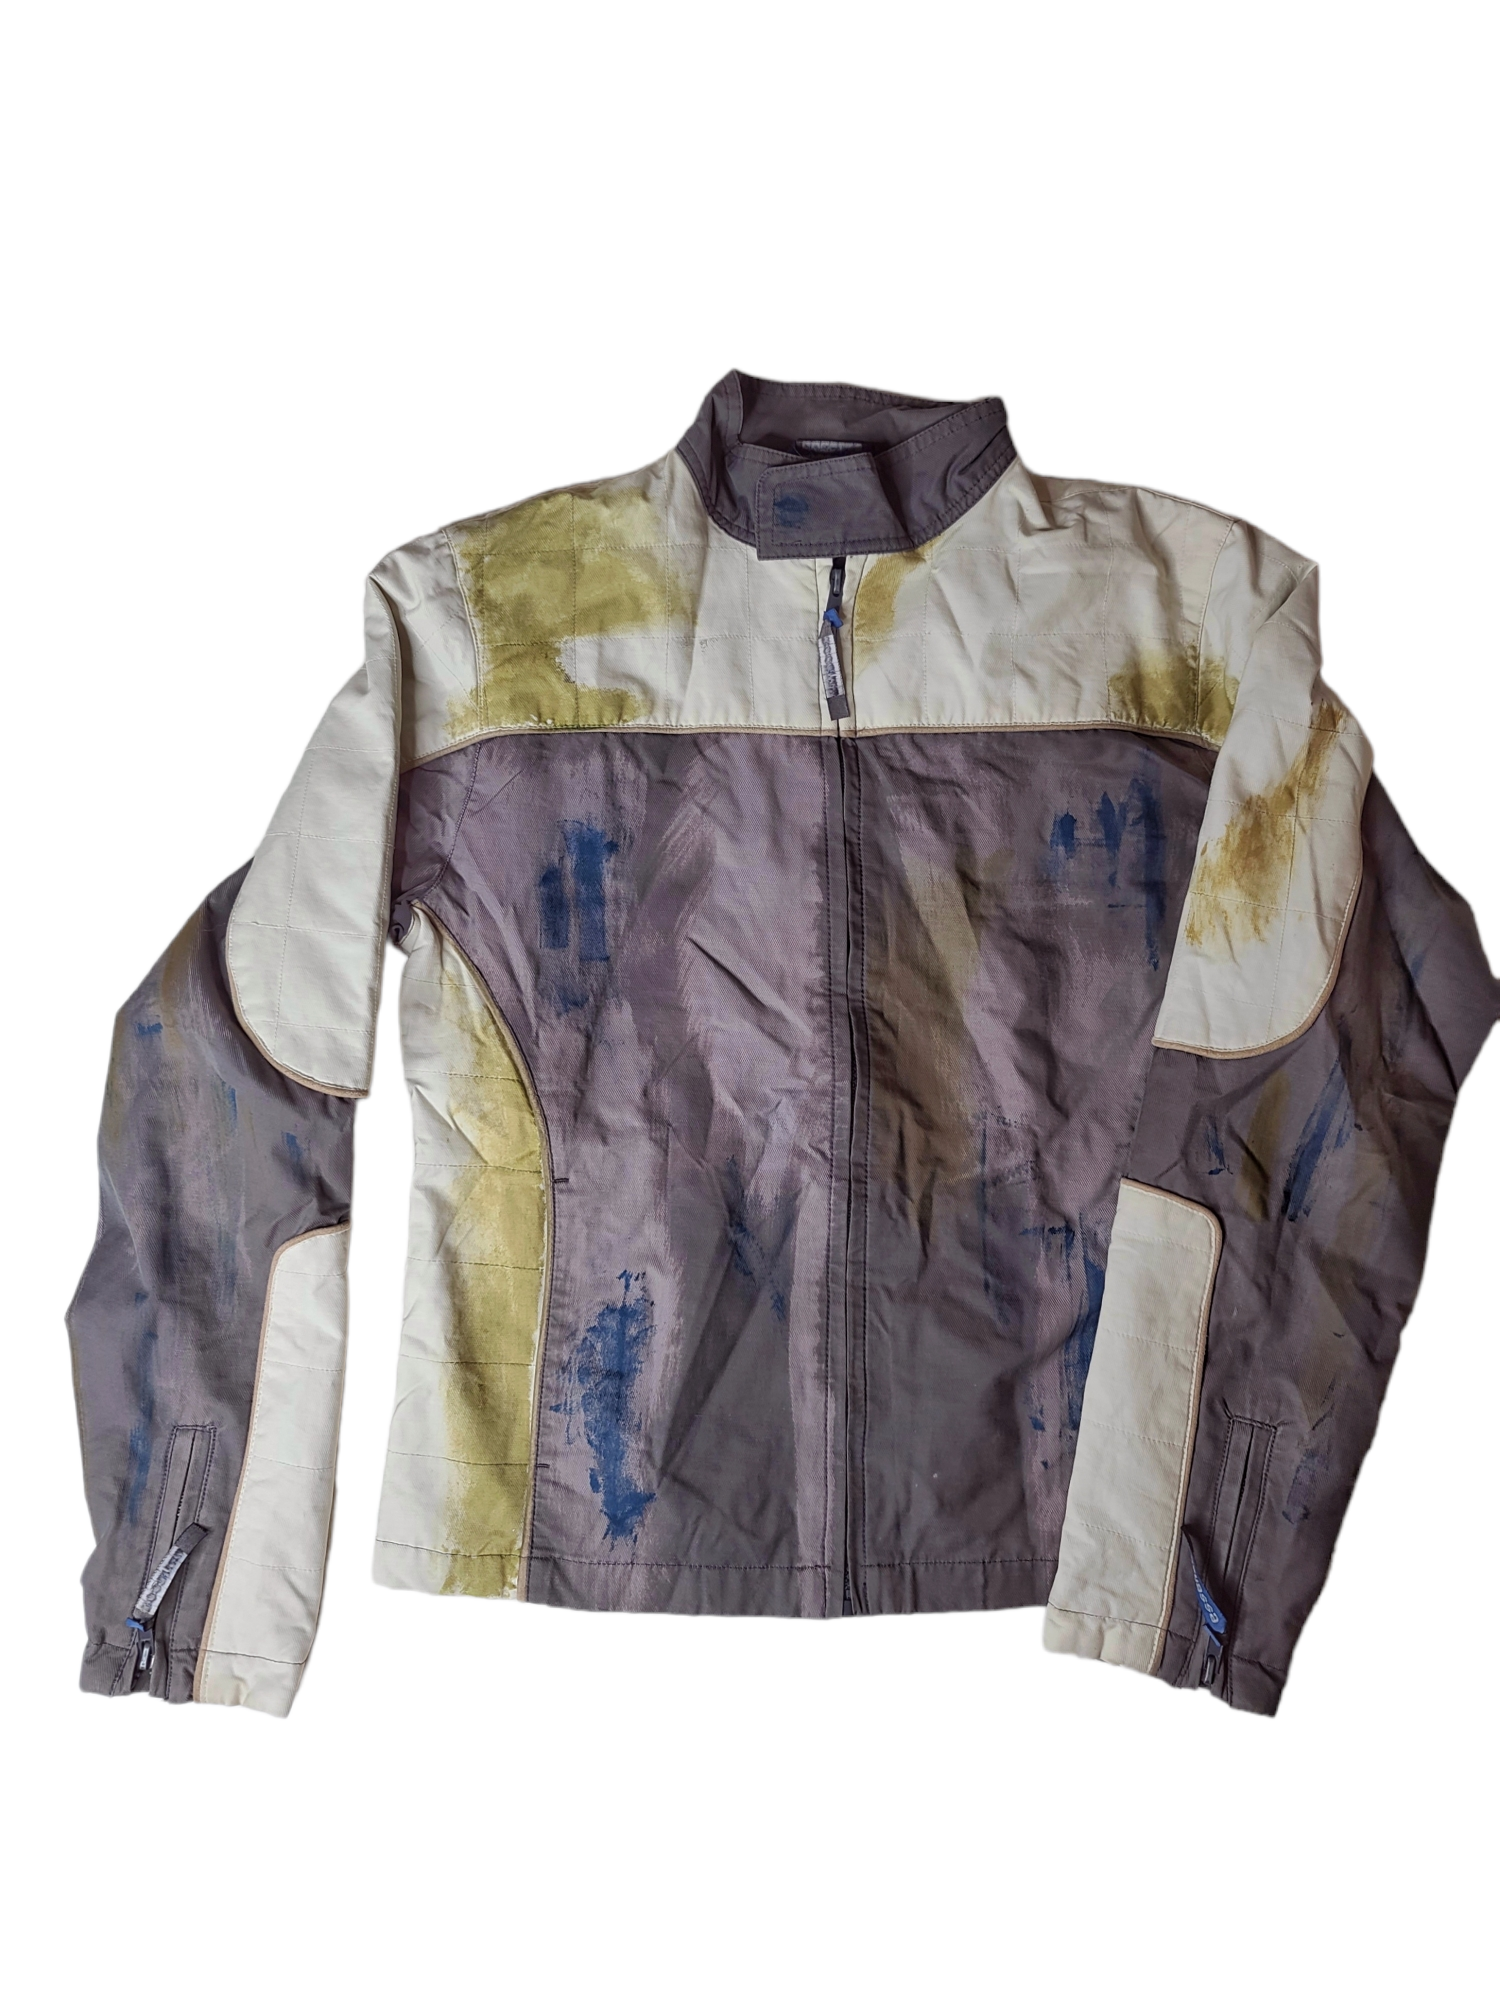 Motorcycle blouson jacket vintage oversize marron grunge 90s aesthetic y2k rare archive fashion racing